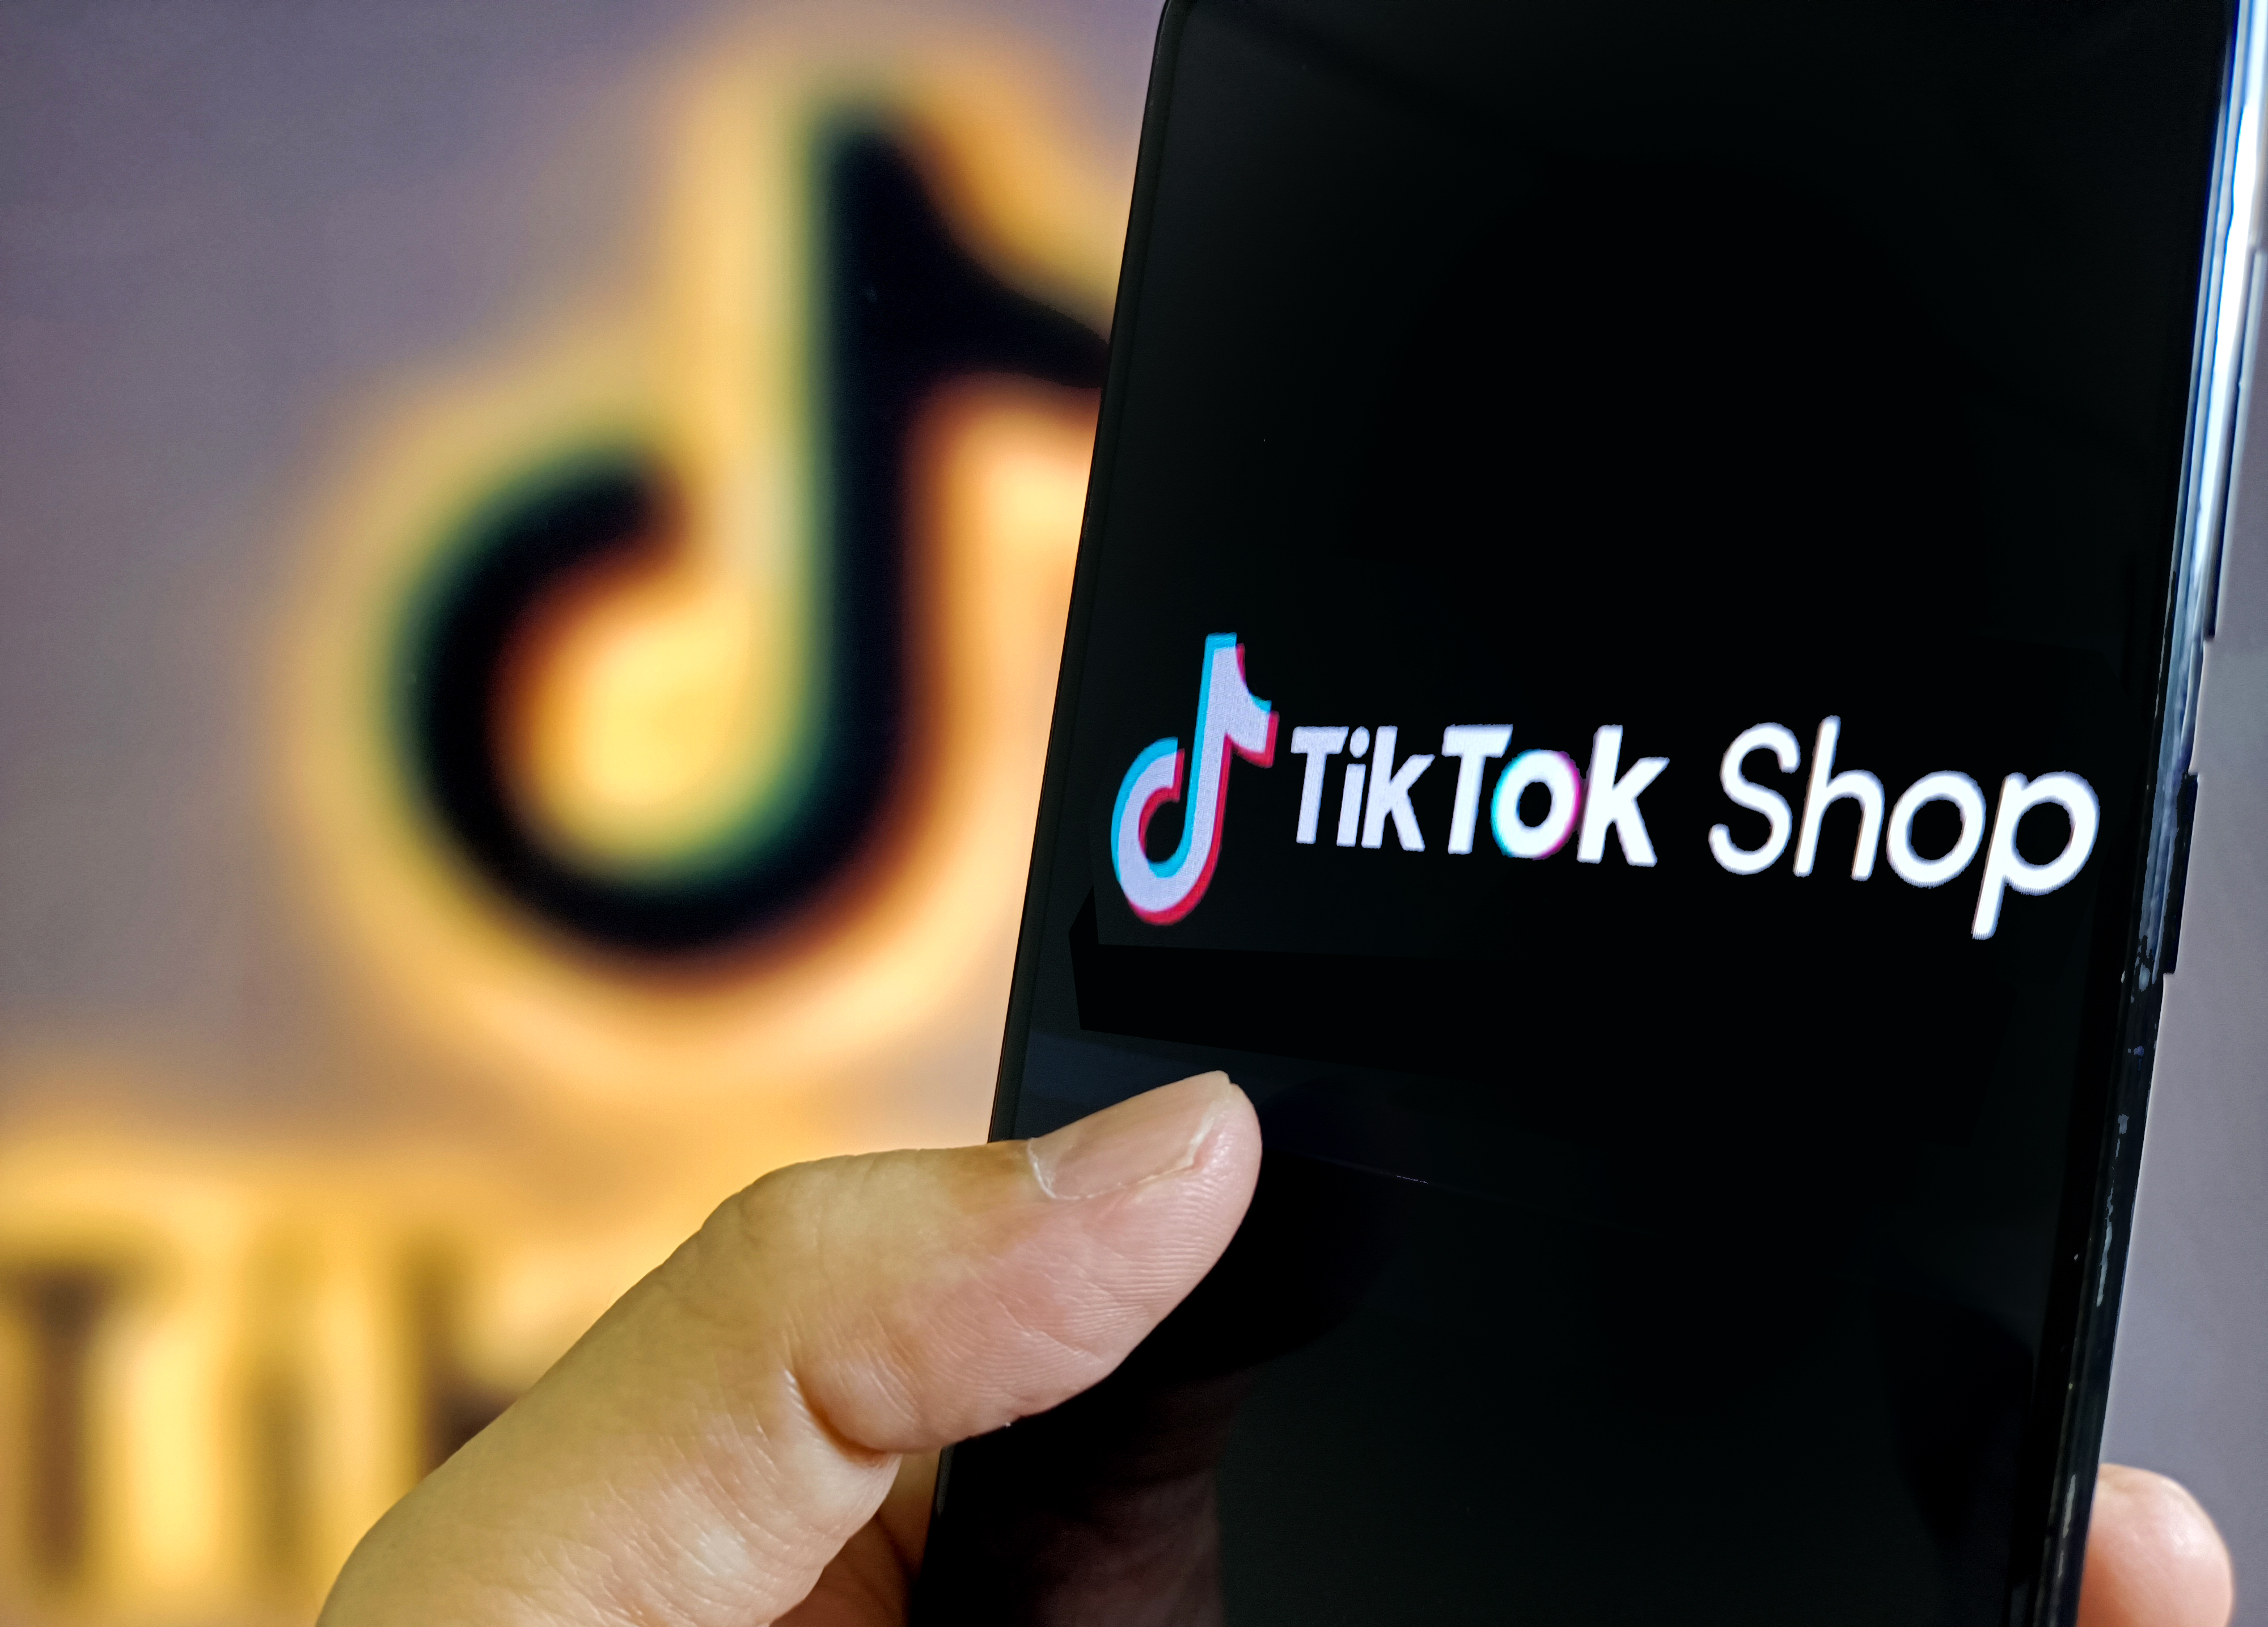 Tiktok Verified Greeting Cards for Sale